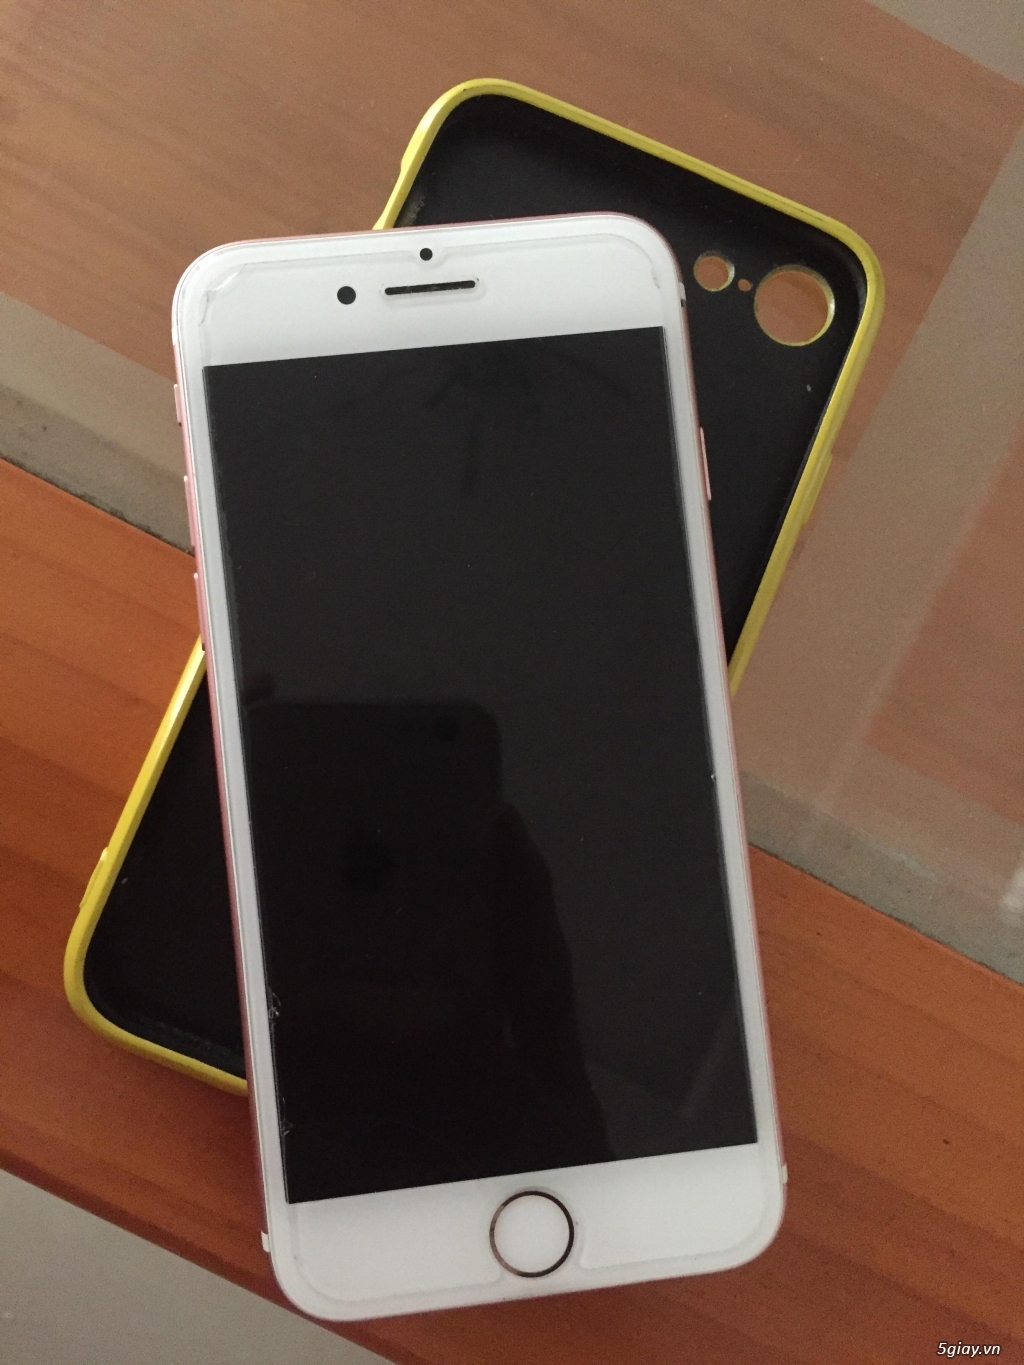 Iphone 7 Gold - 128 Gb